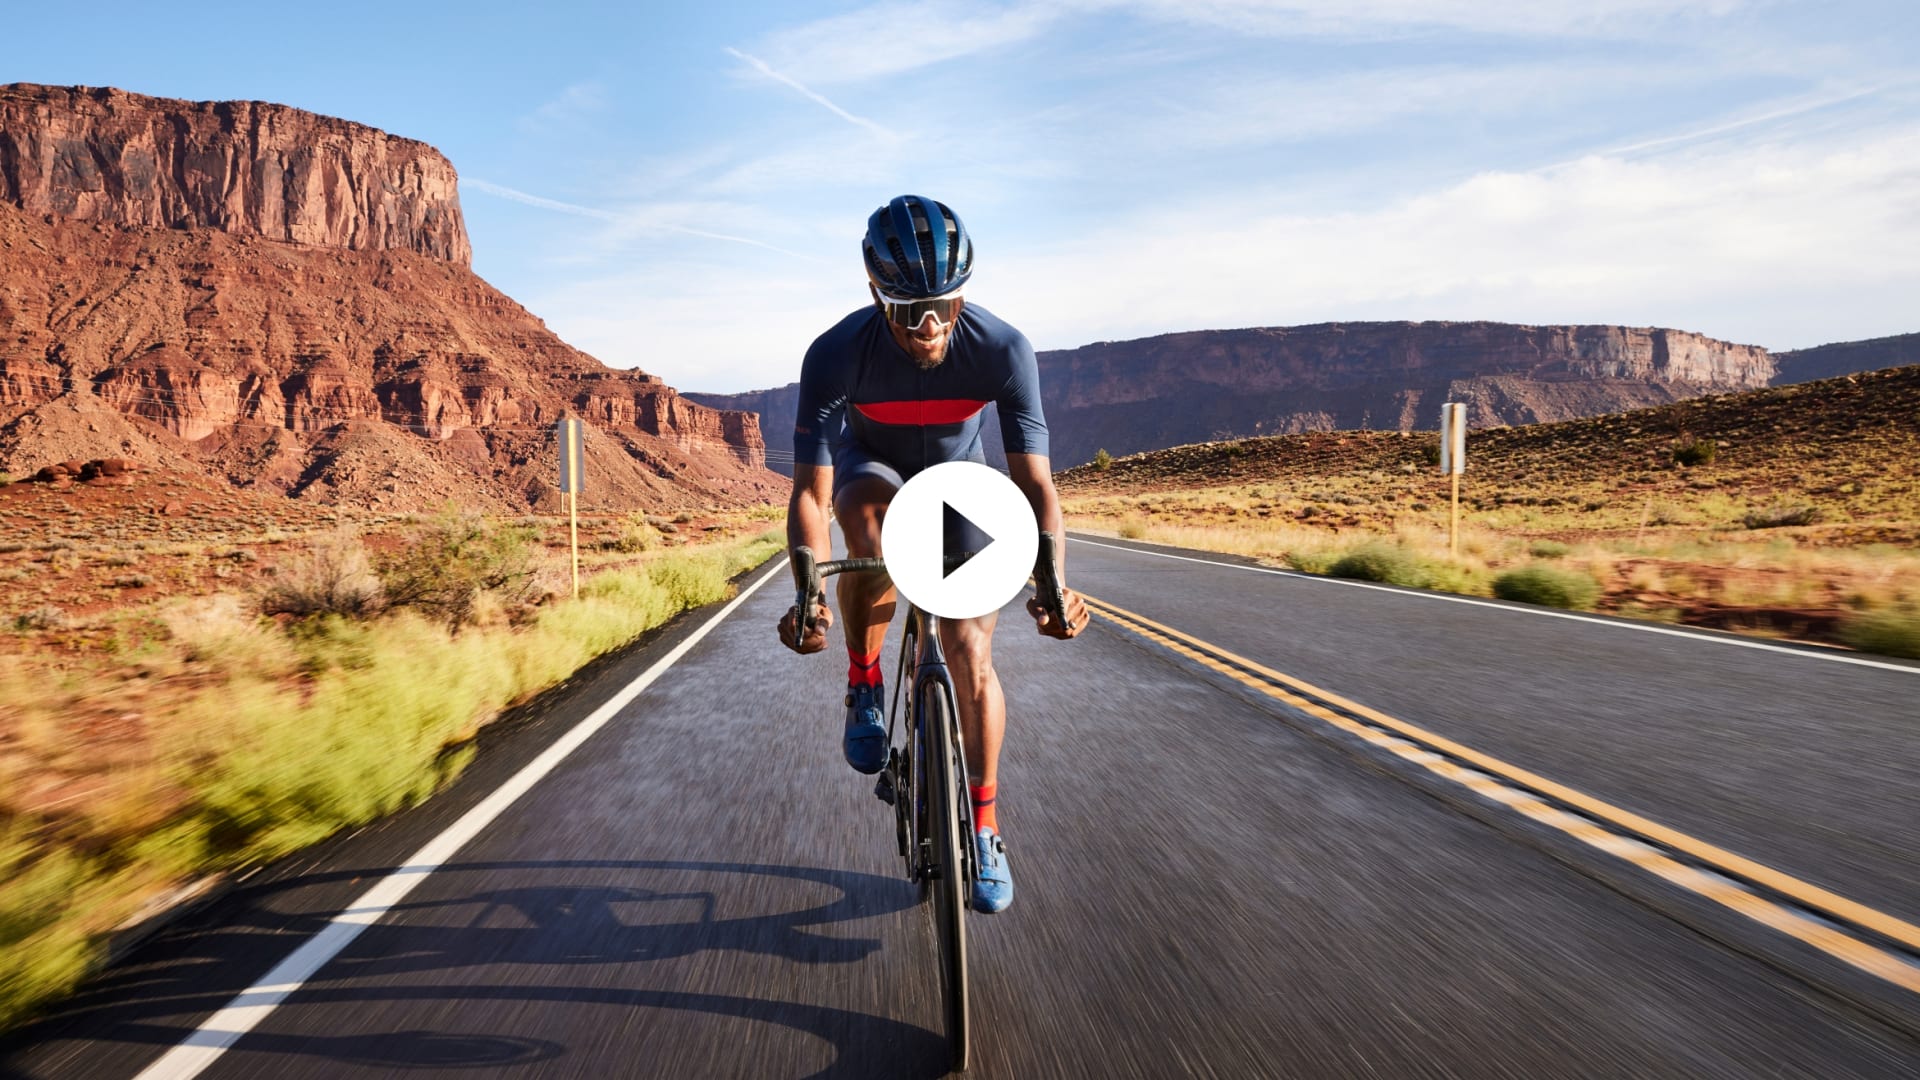 Men's cycling jerseys - Trek Bikes (CA)